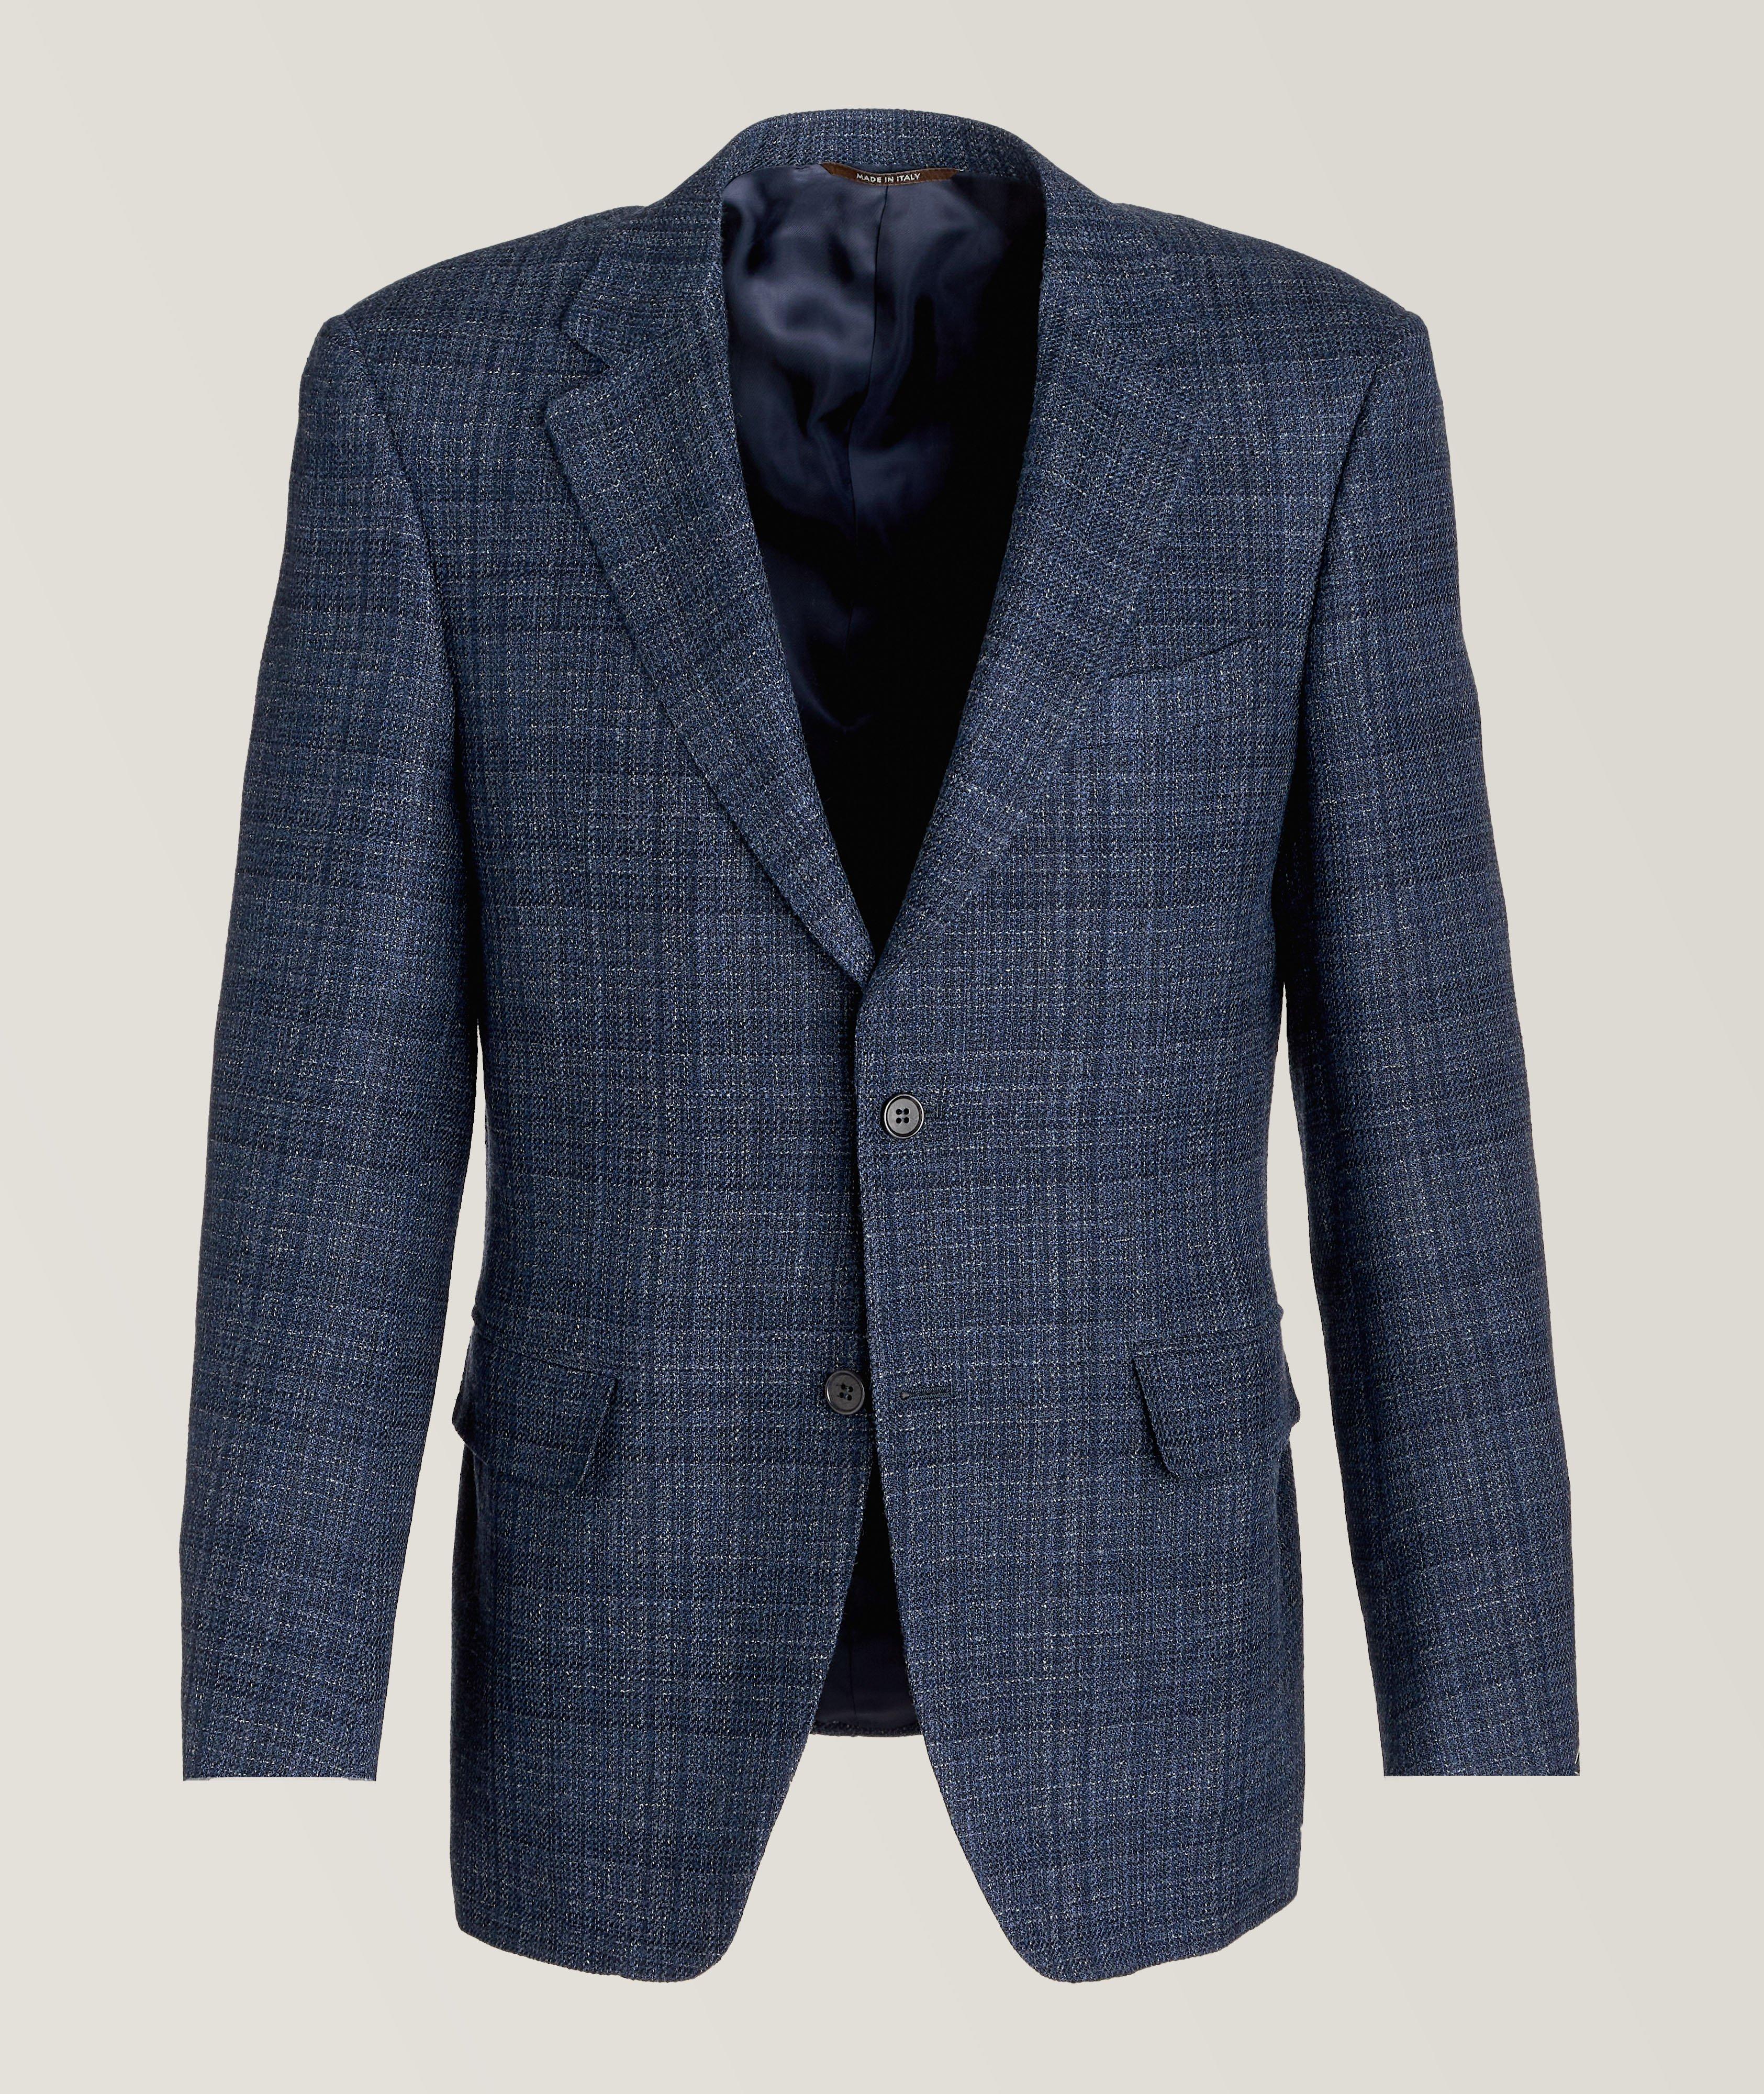 Textured Windowpane Stretch Wool-Cashmere Sport Jacket image 0